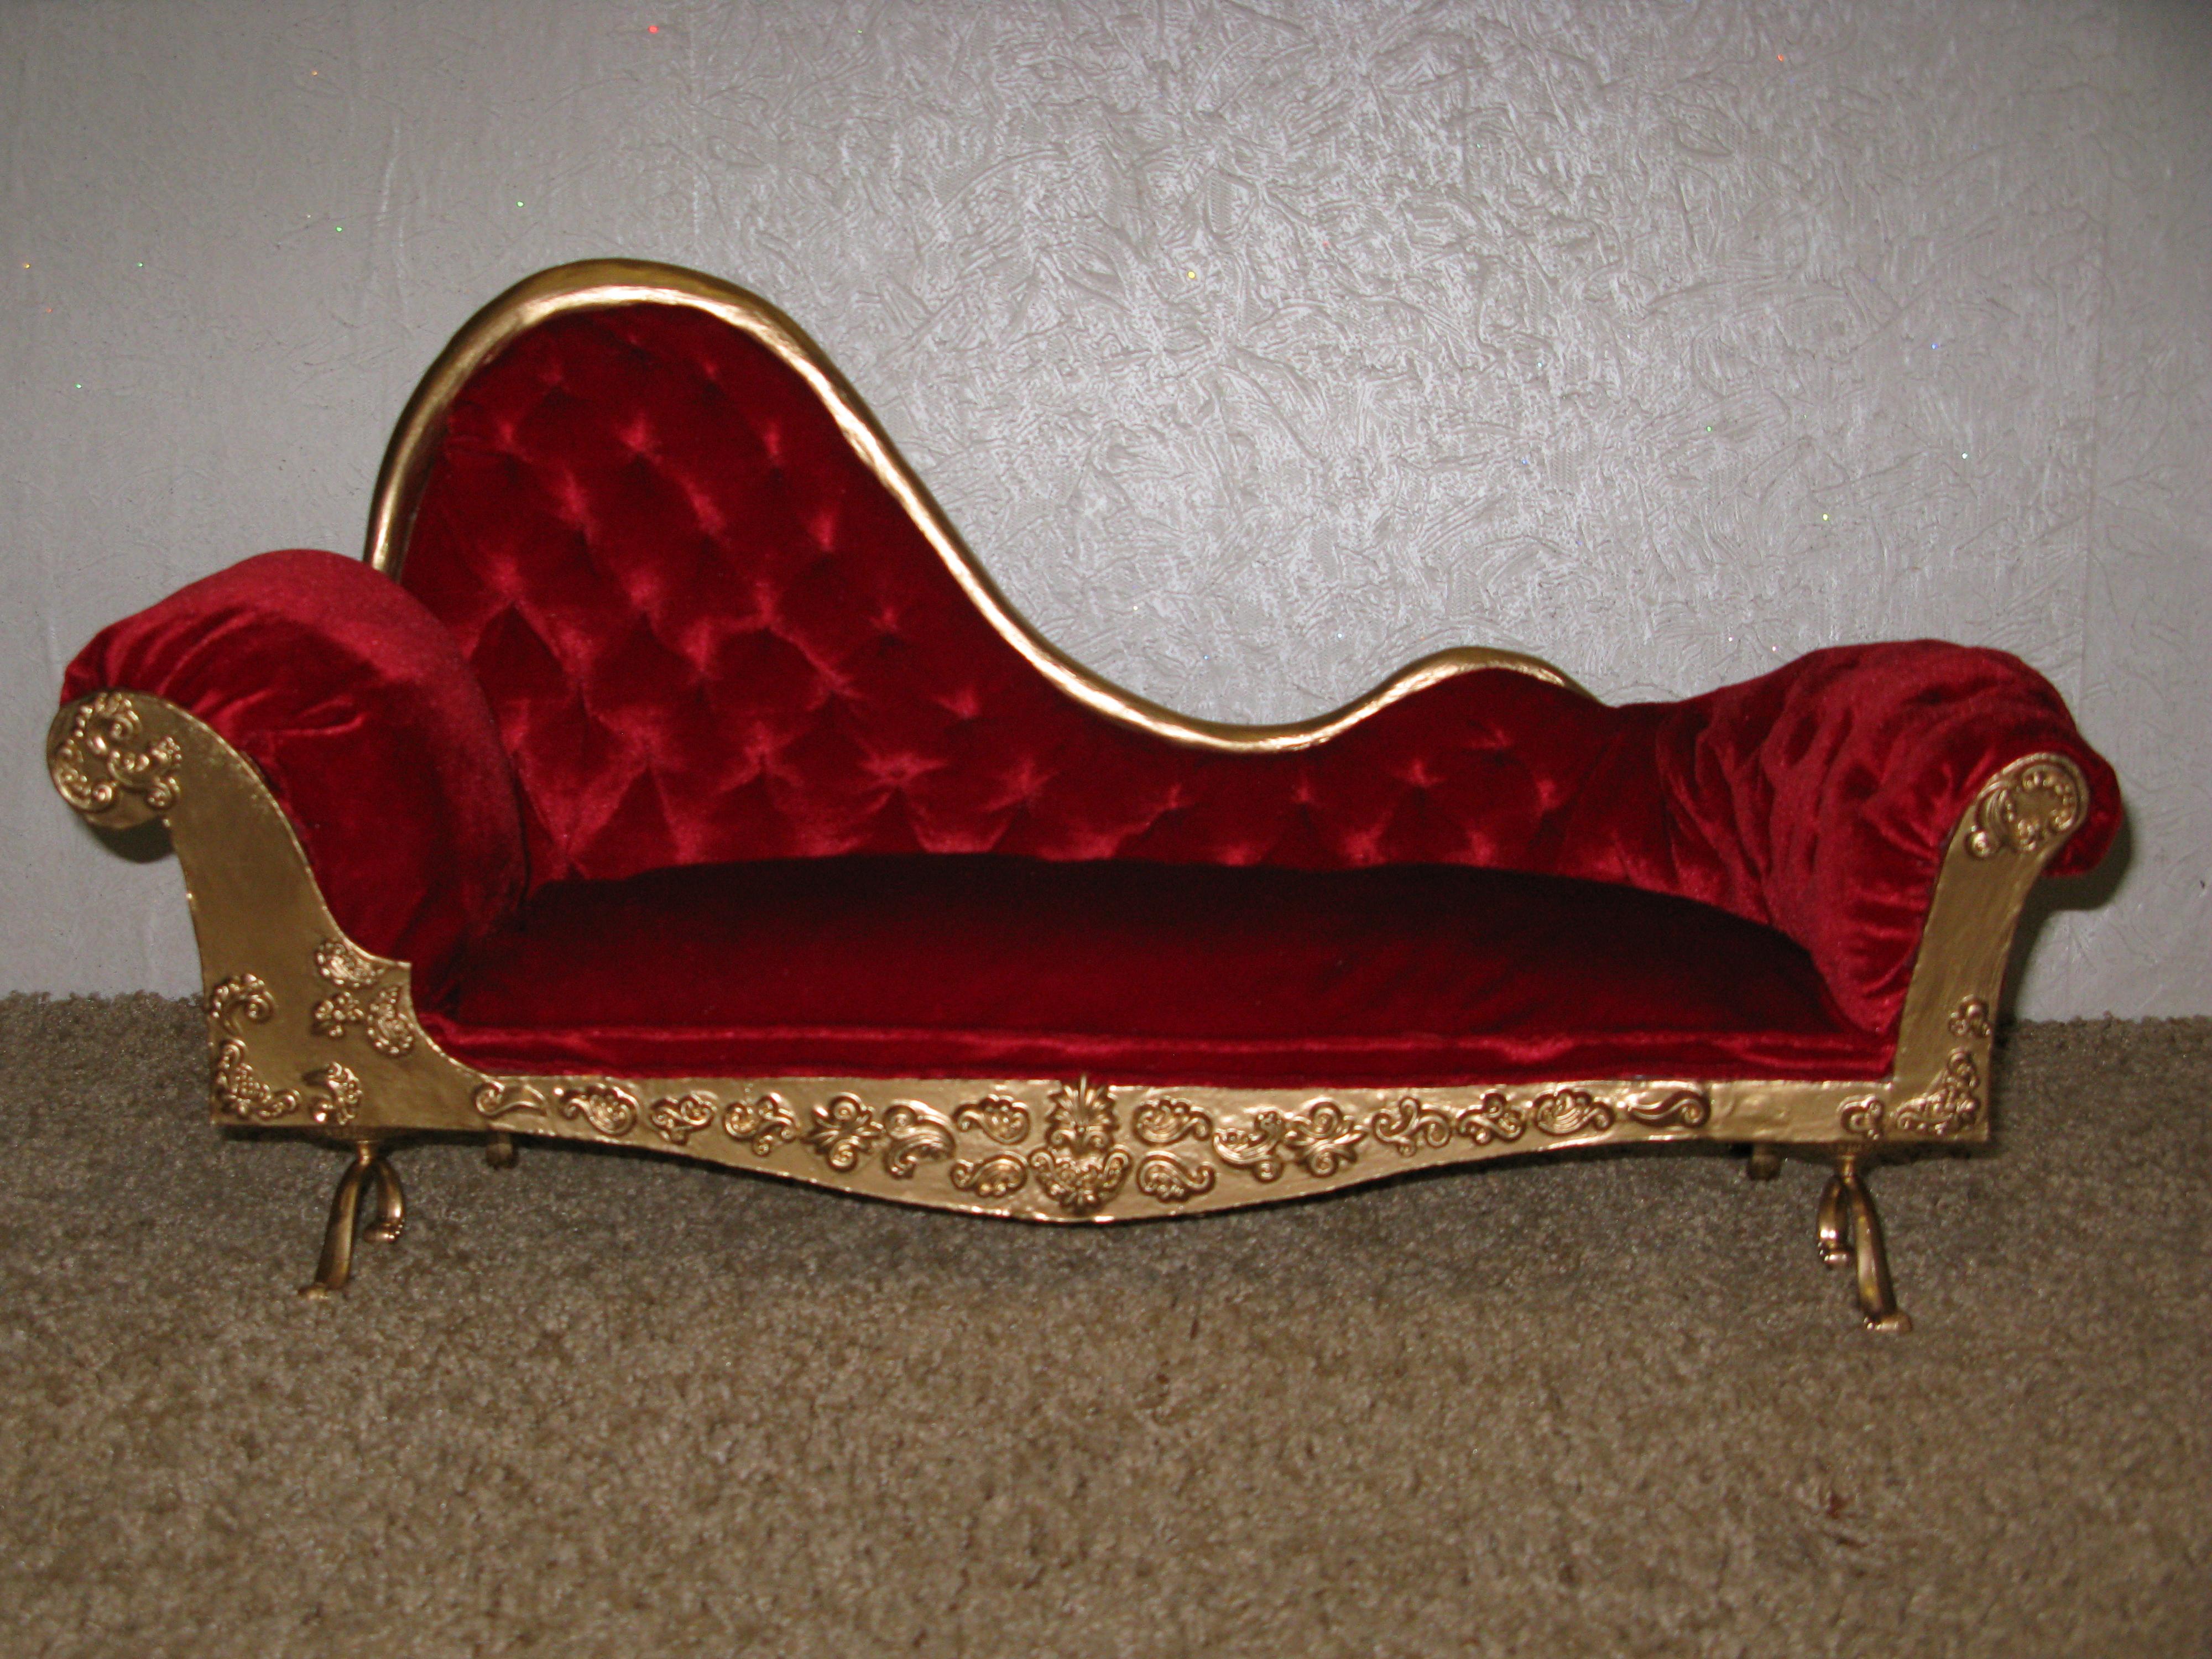 Victorian Sofa For Bjd By Zefforian On Deviantart